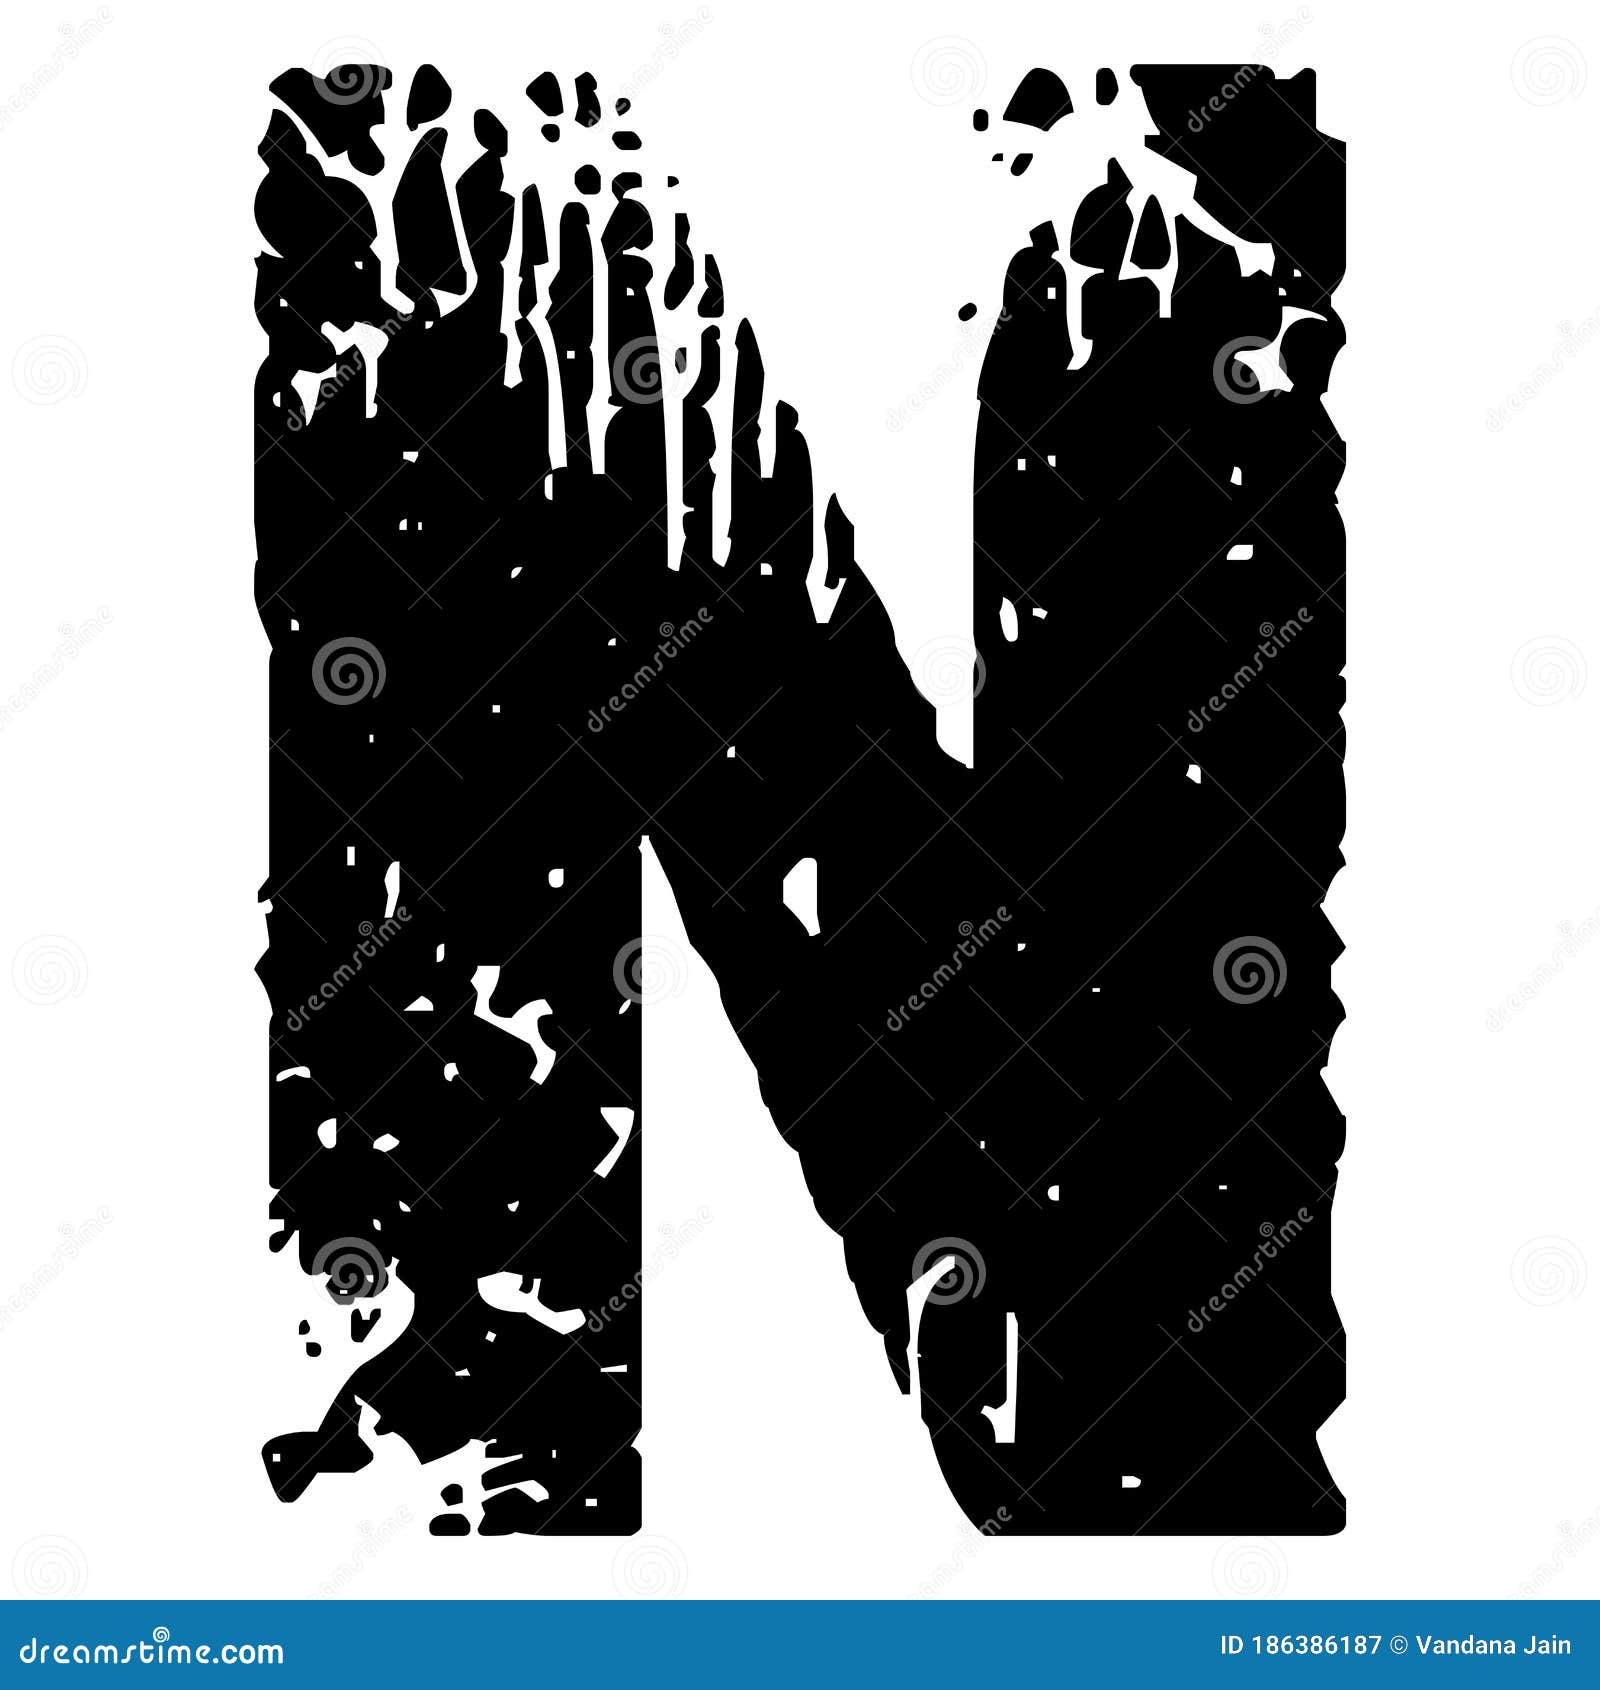 Alphabet Symbol - Stylish Letter  Font Symbol of   on White Background. Stock Illustration - Illustration of game, grunge:  186386187